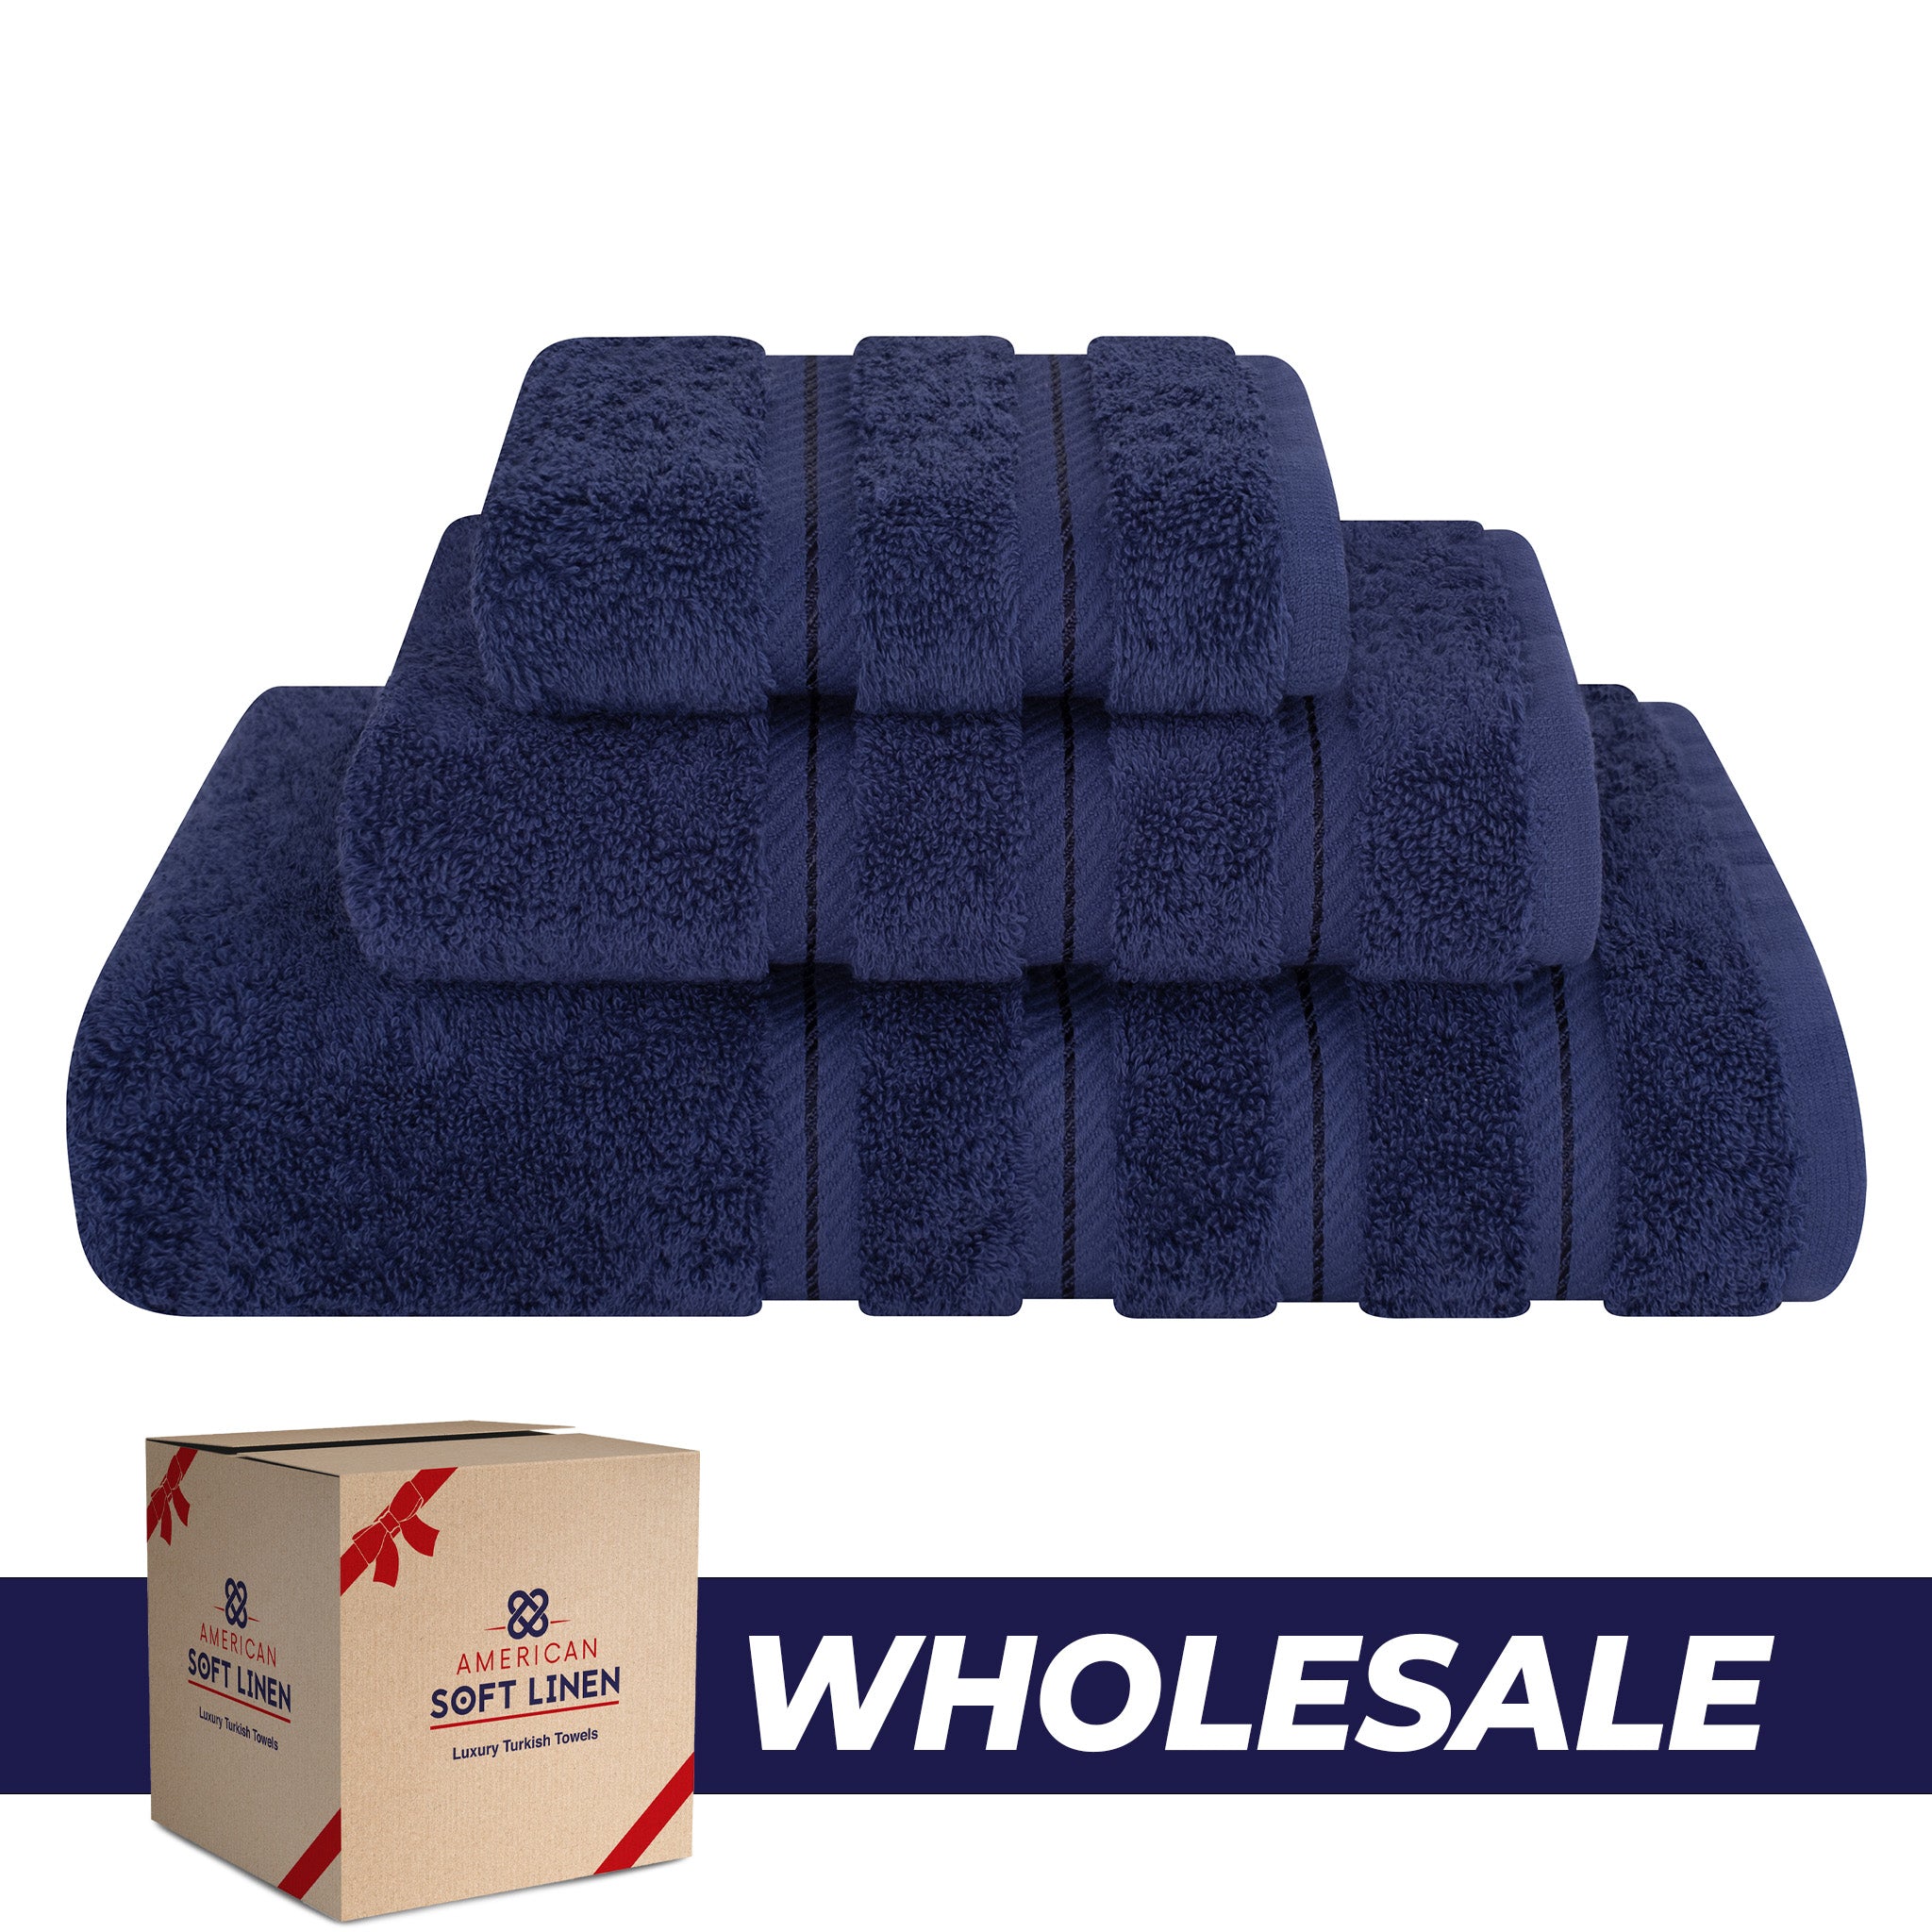 American Soft Linen 3 Piece Luxury Hotel Towel Set 20 set case pack navy-blue-0